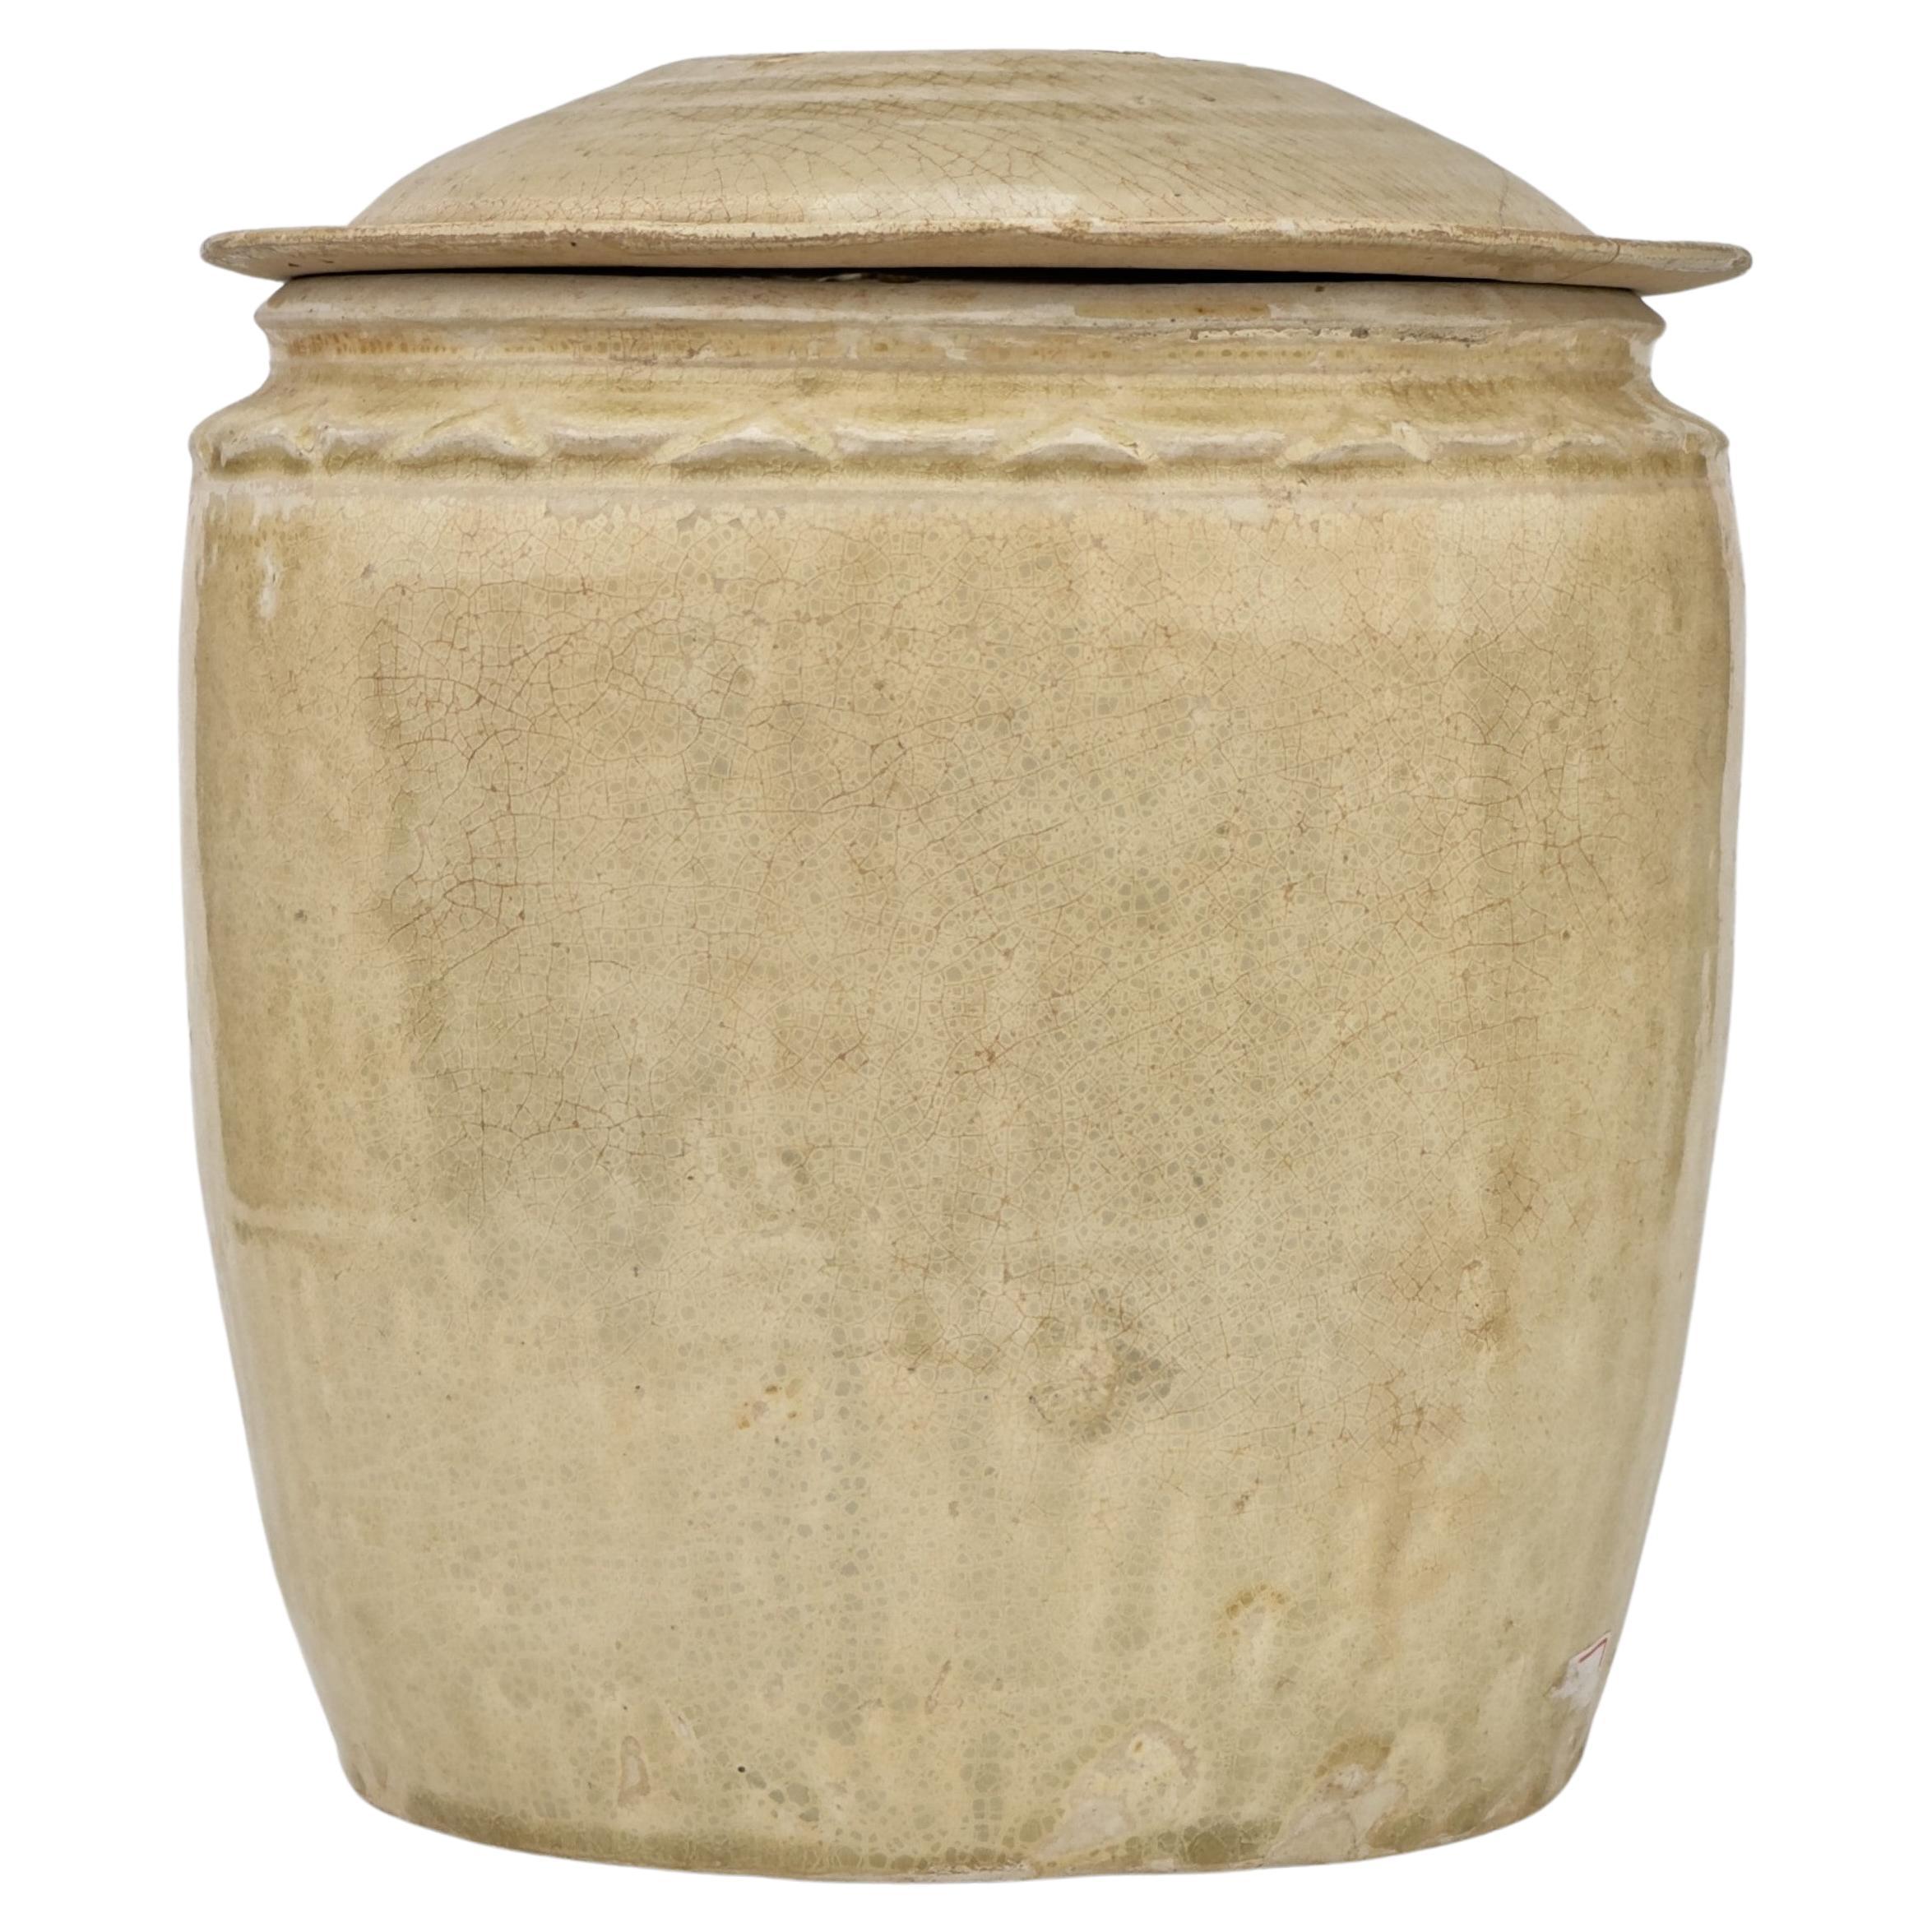 Annamese Cylindrical Jar, Vietnam, 11-15th century